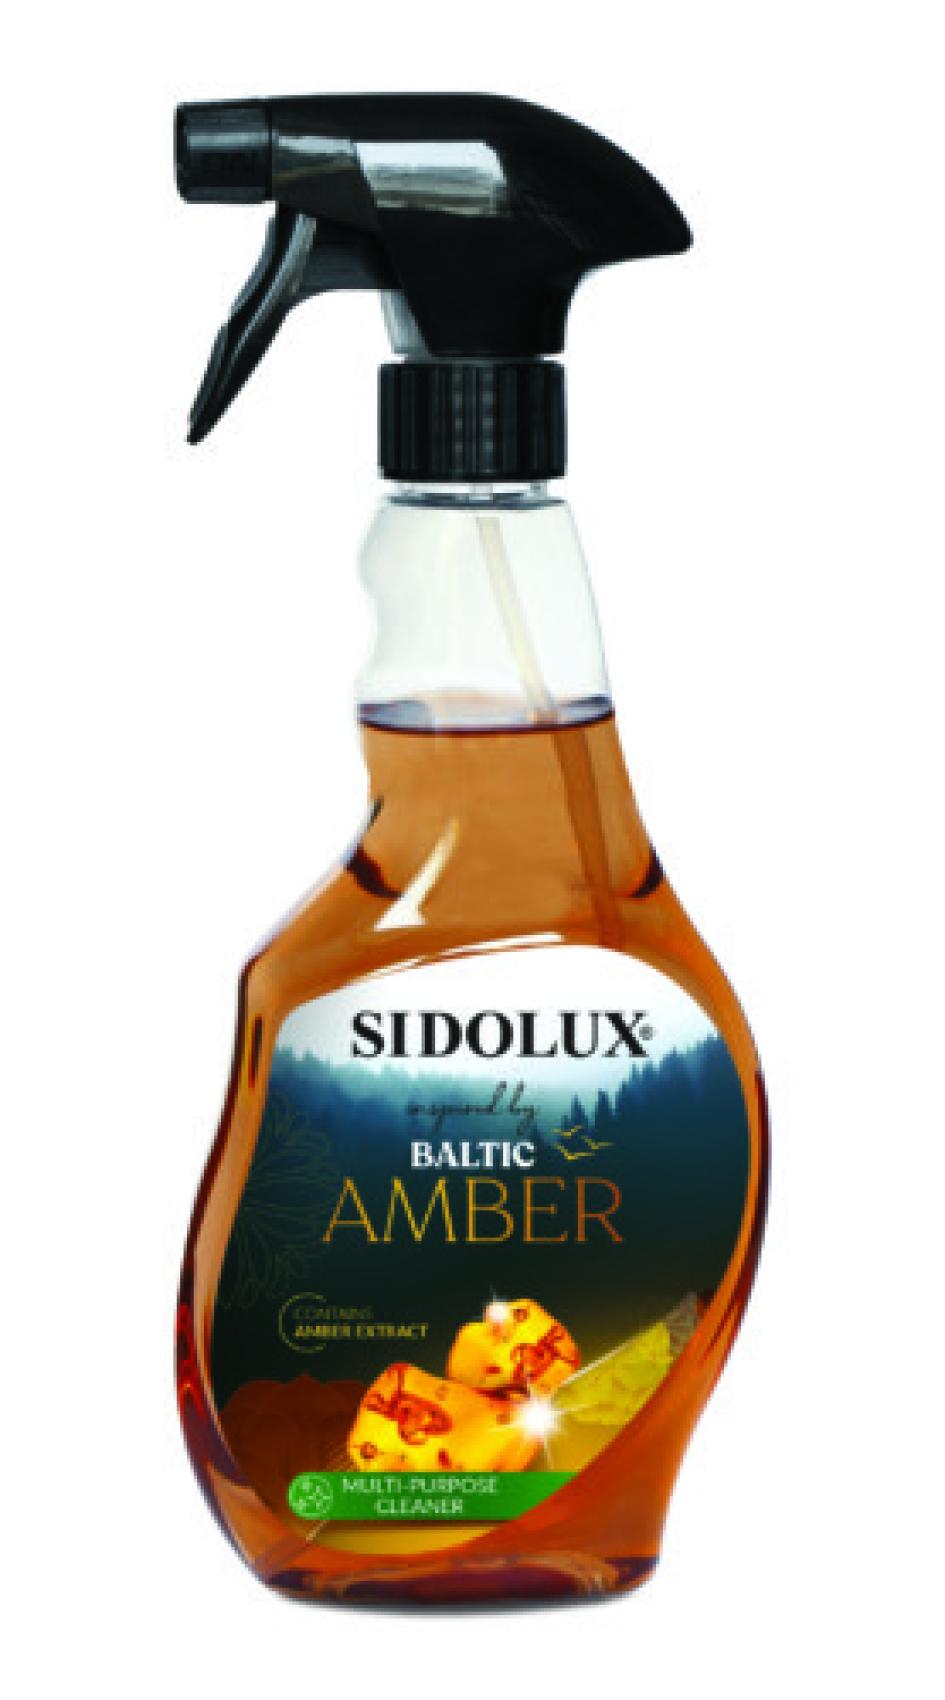 Sidolux M proti prachu rozpraova 400ml baltic amber - Kliknutm na obrzek zavete